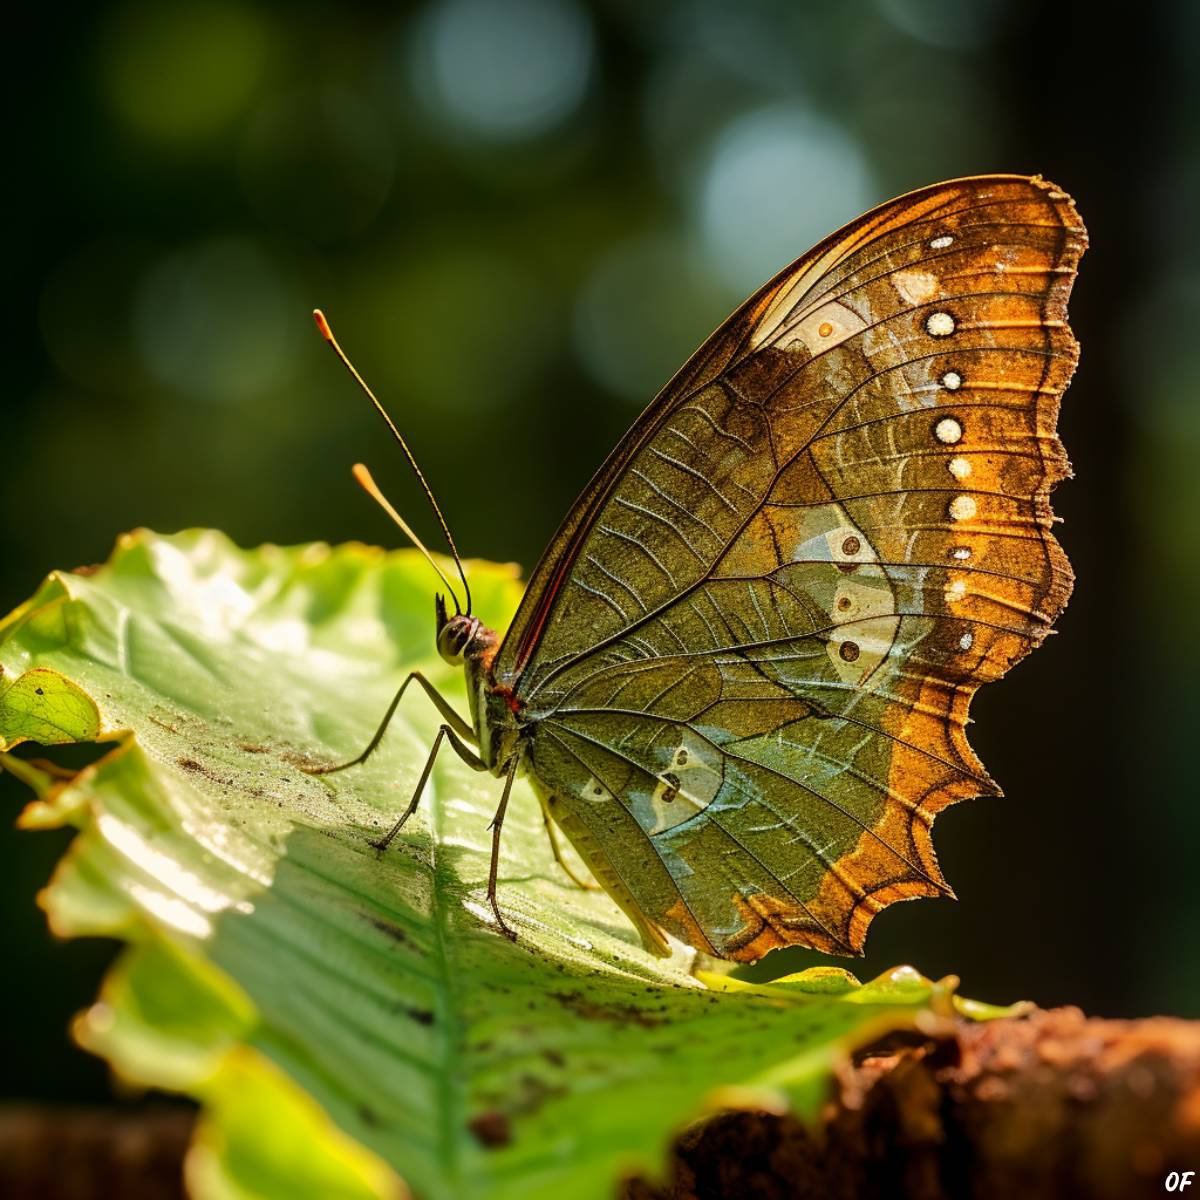 A Dead Leaf Butterfly